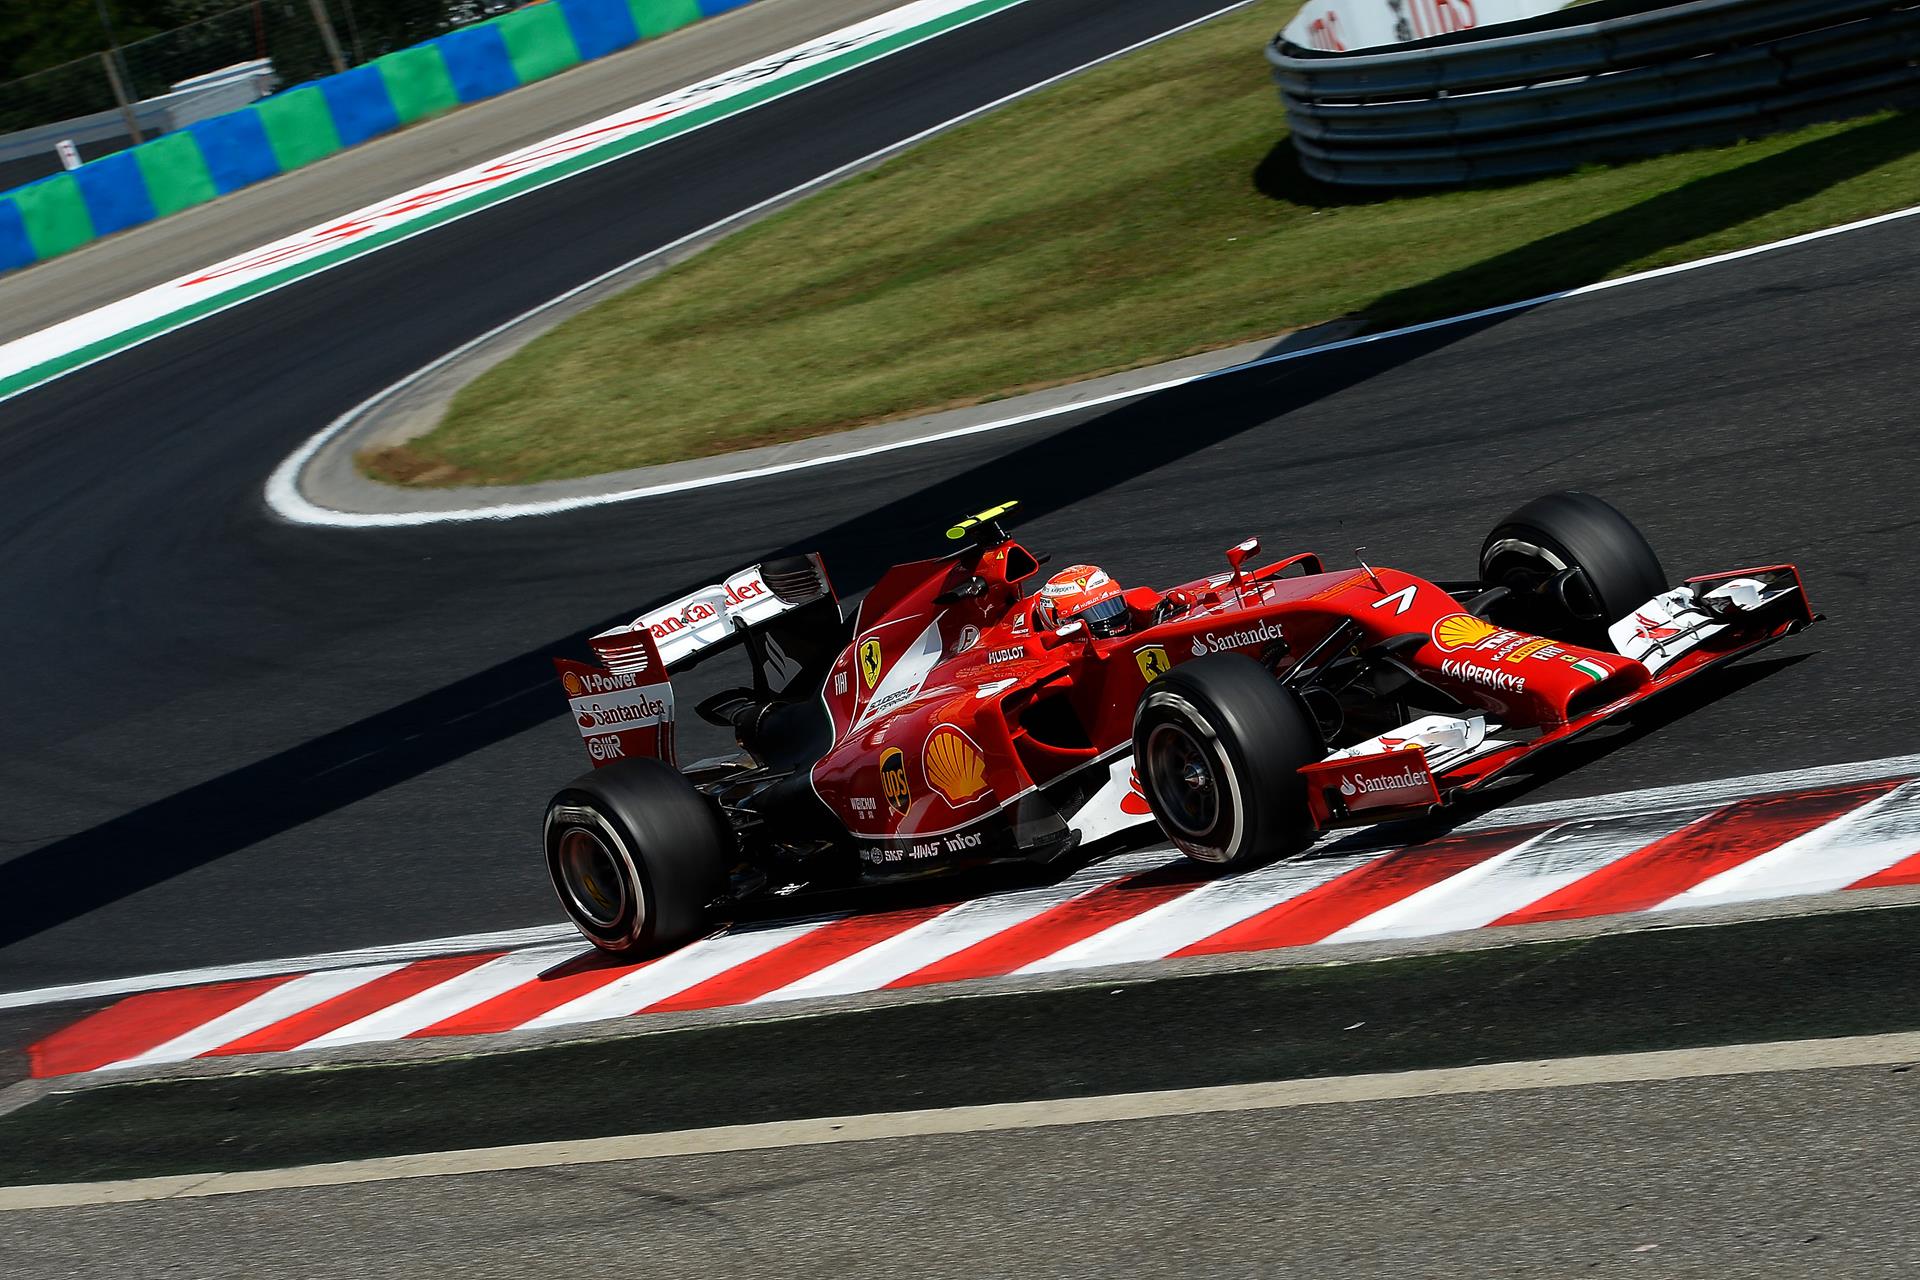 2014 Ferrari F14 T Image. Photo 16 of 81